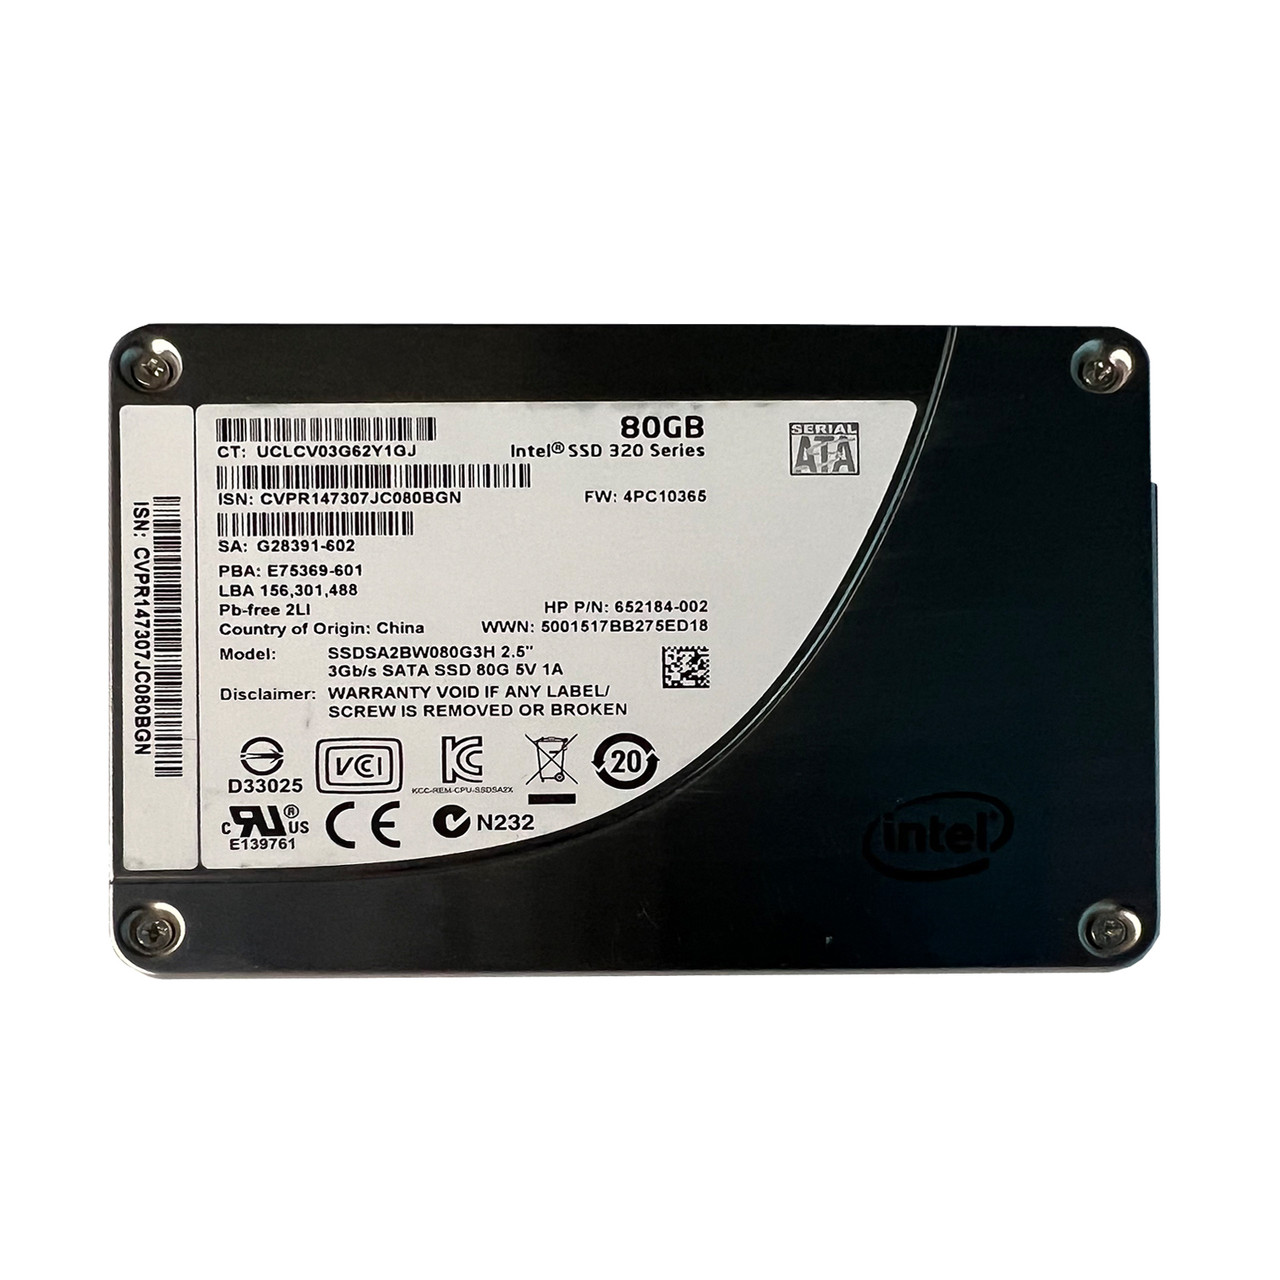 HP 652184-002 80GB SATA 2.5" SSD SSDSA2BW080G3H